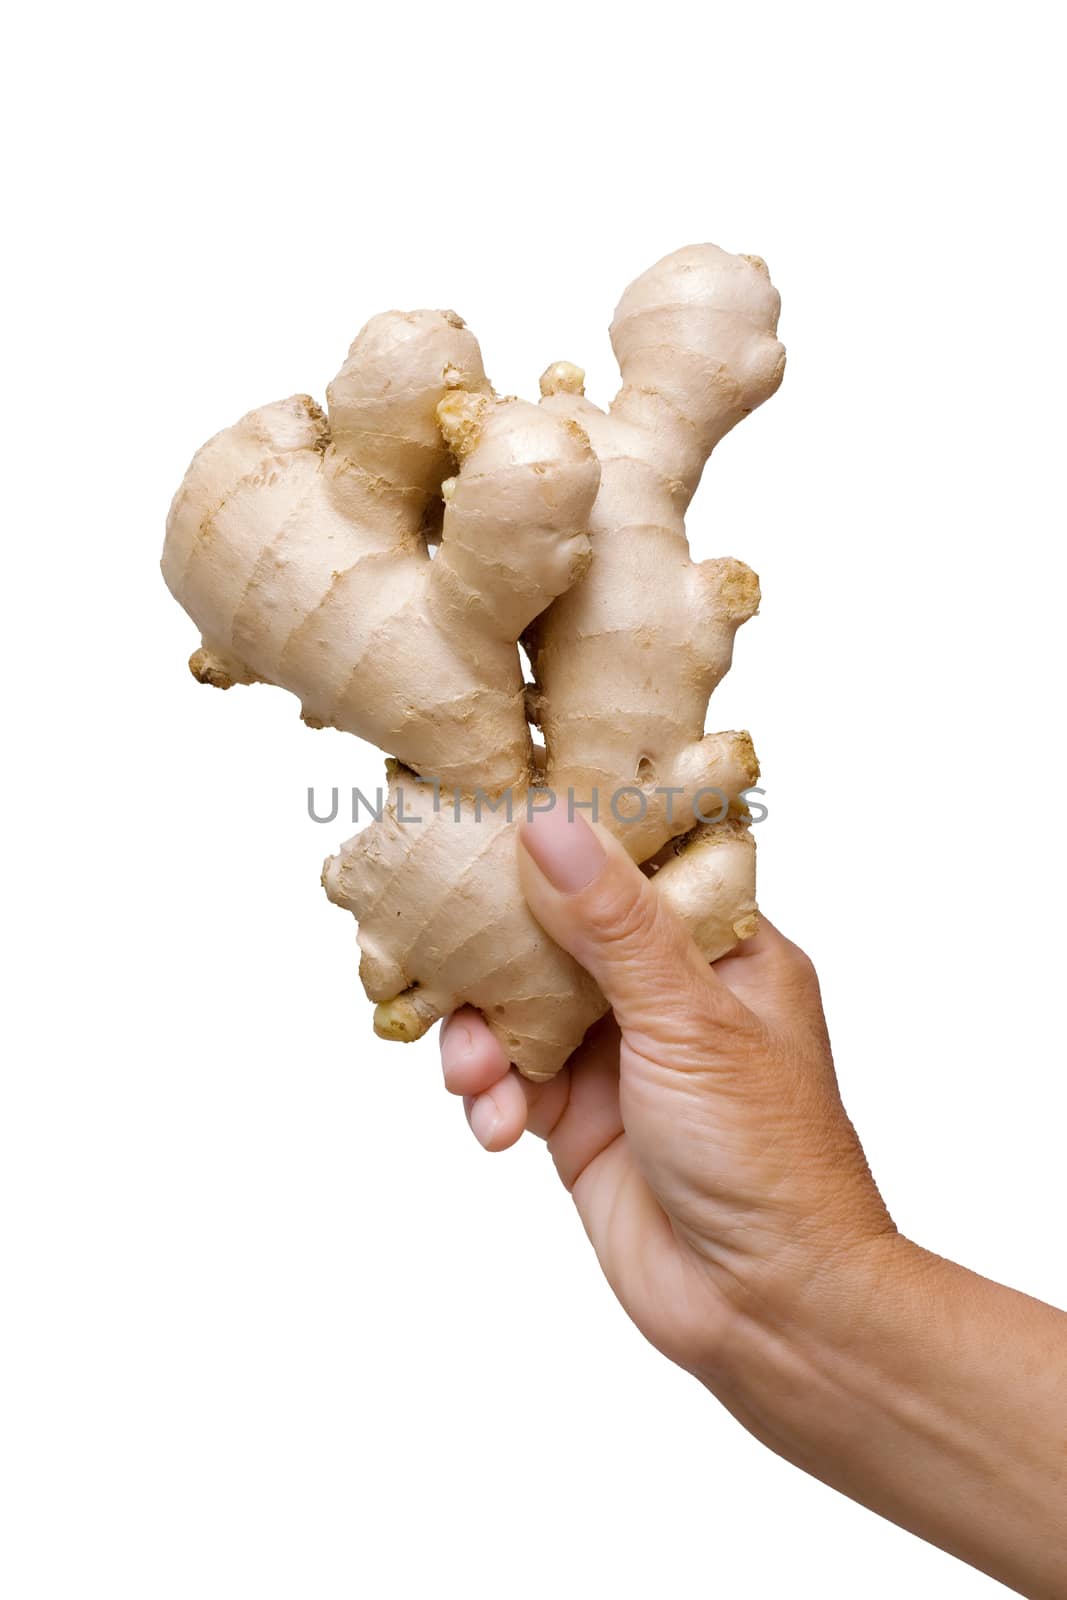 Holding ginger root on white background